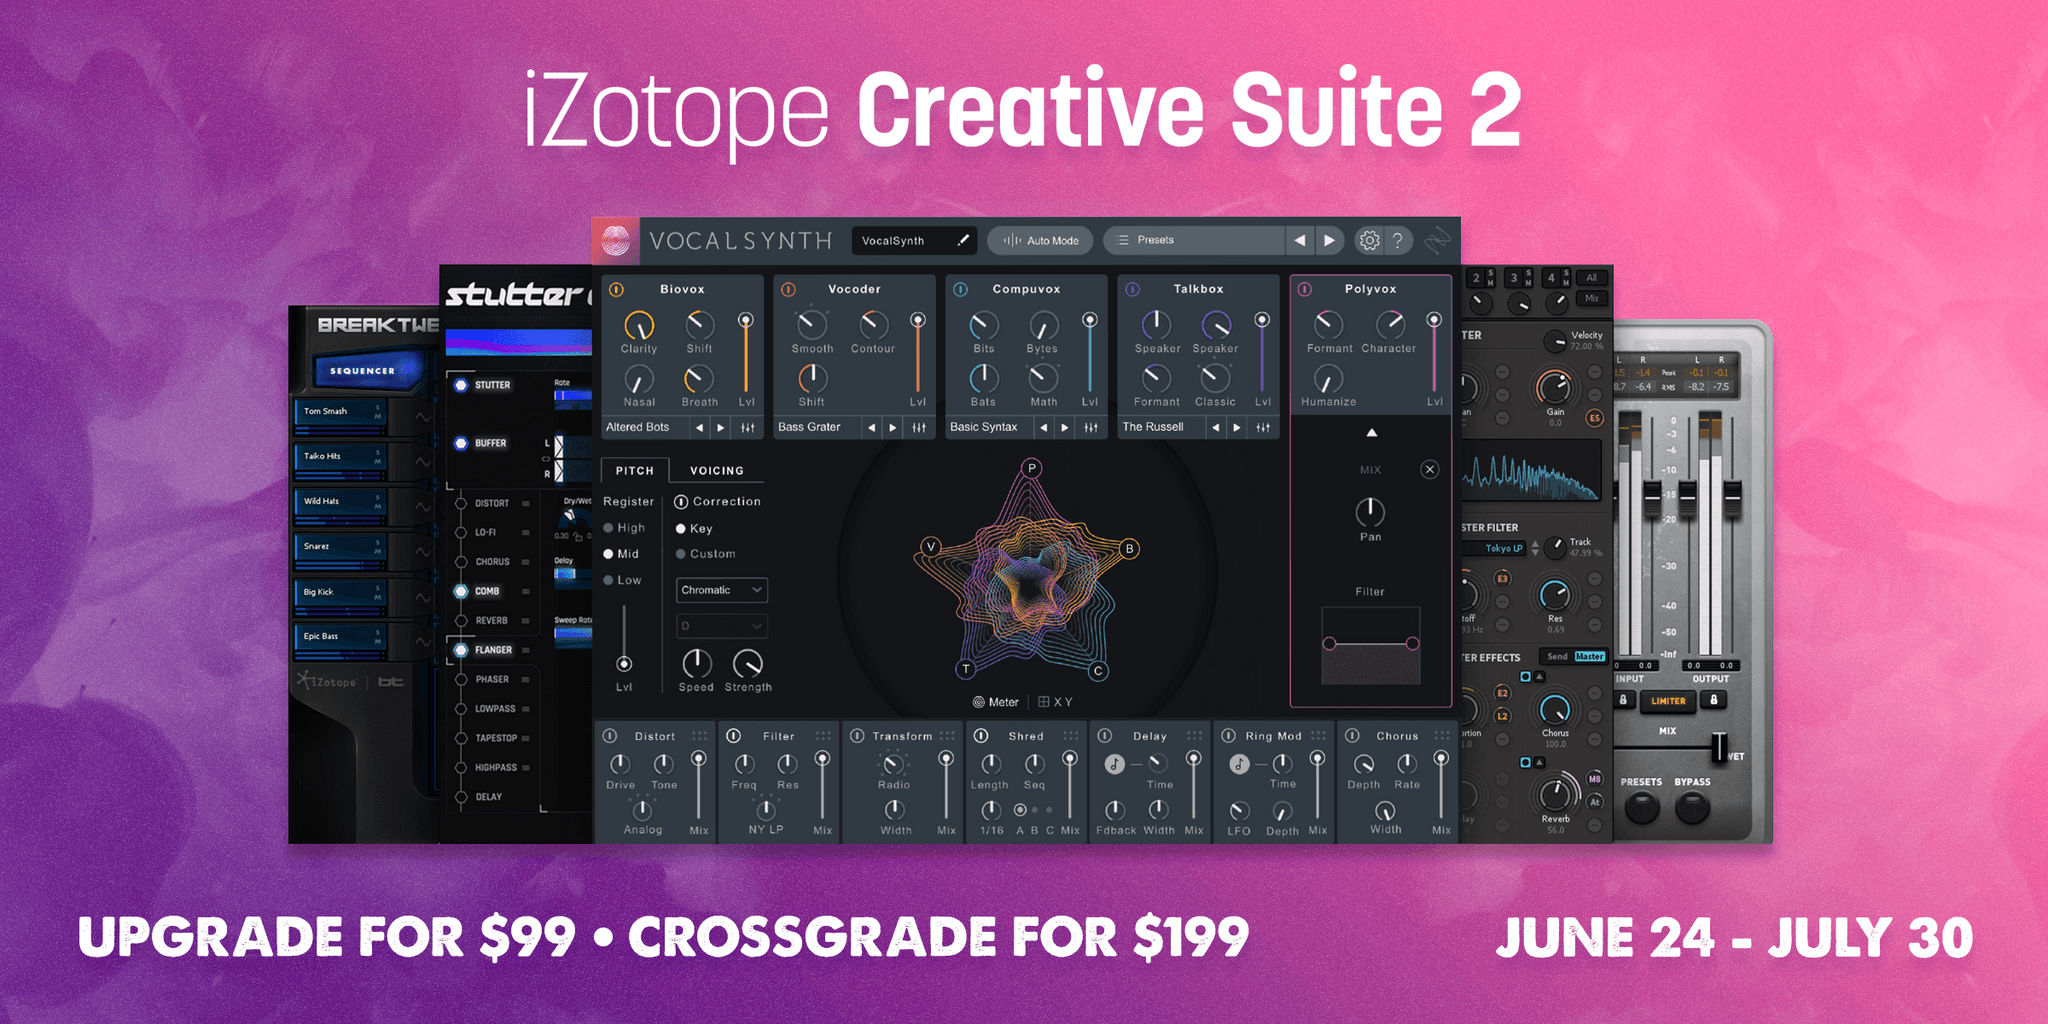 iZotope Creative Suite 2 Launch Sale - June 24 - July 30